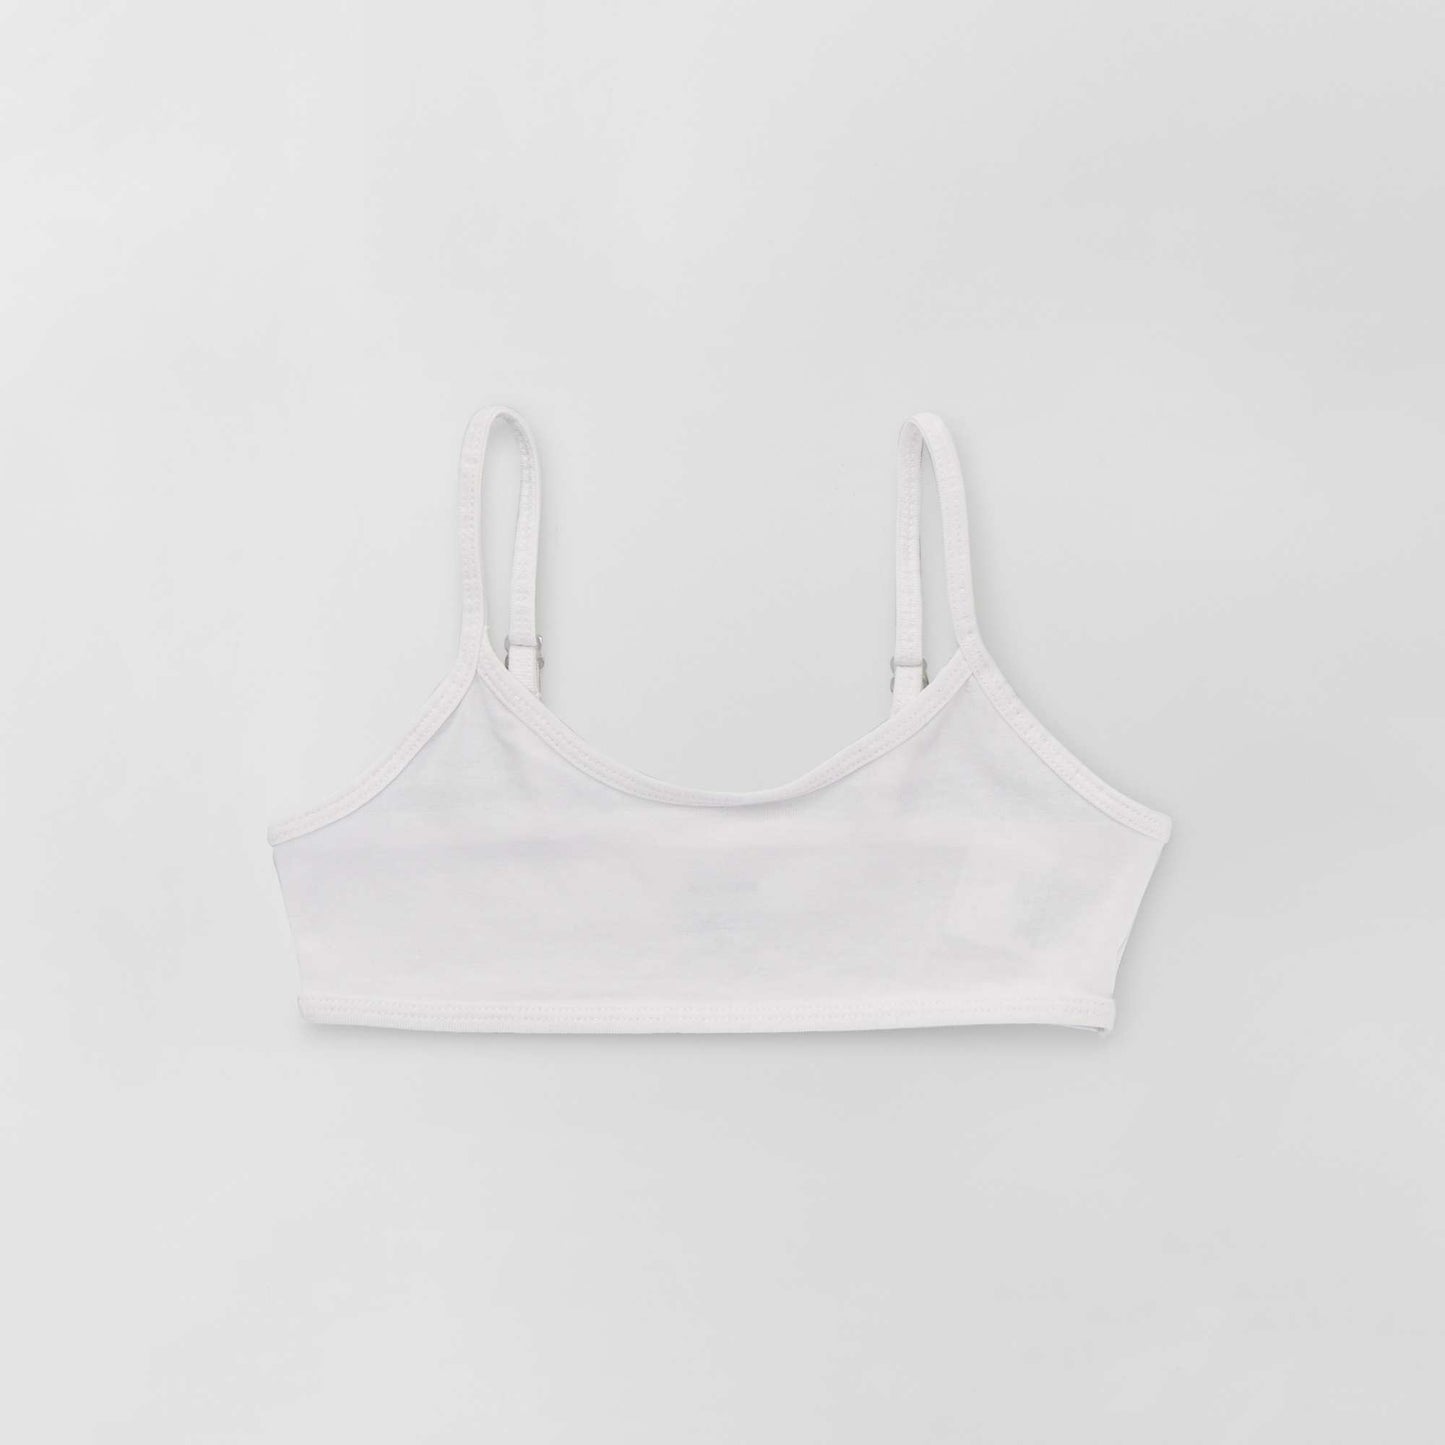 Pack of 2 eco-design bra tops Black